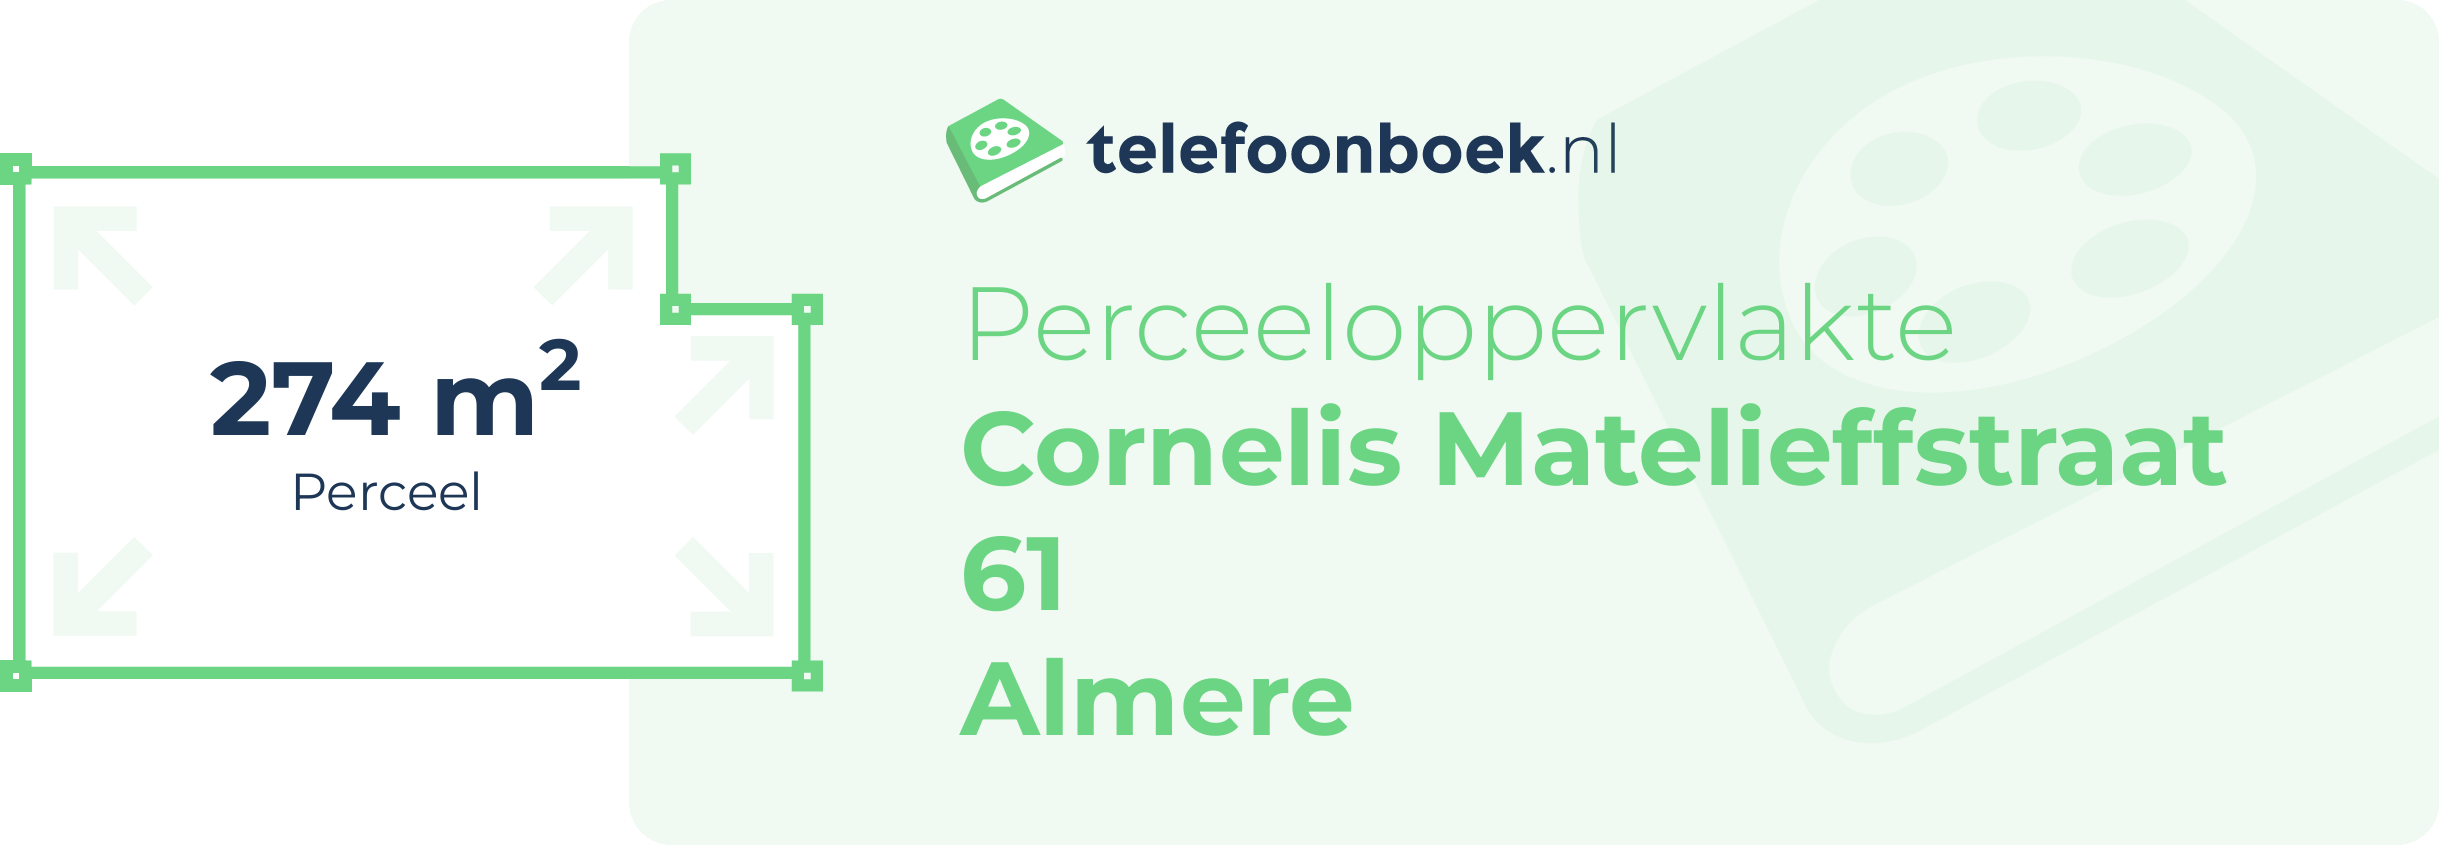 Perceeloppervlakte Cornelis Matelieffstraat 61 Almere